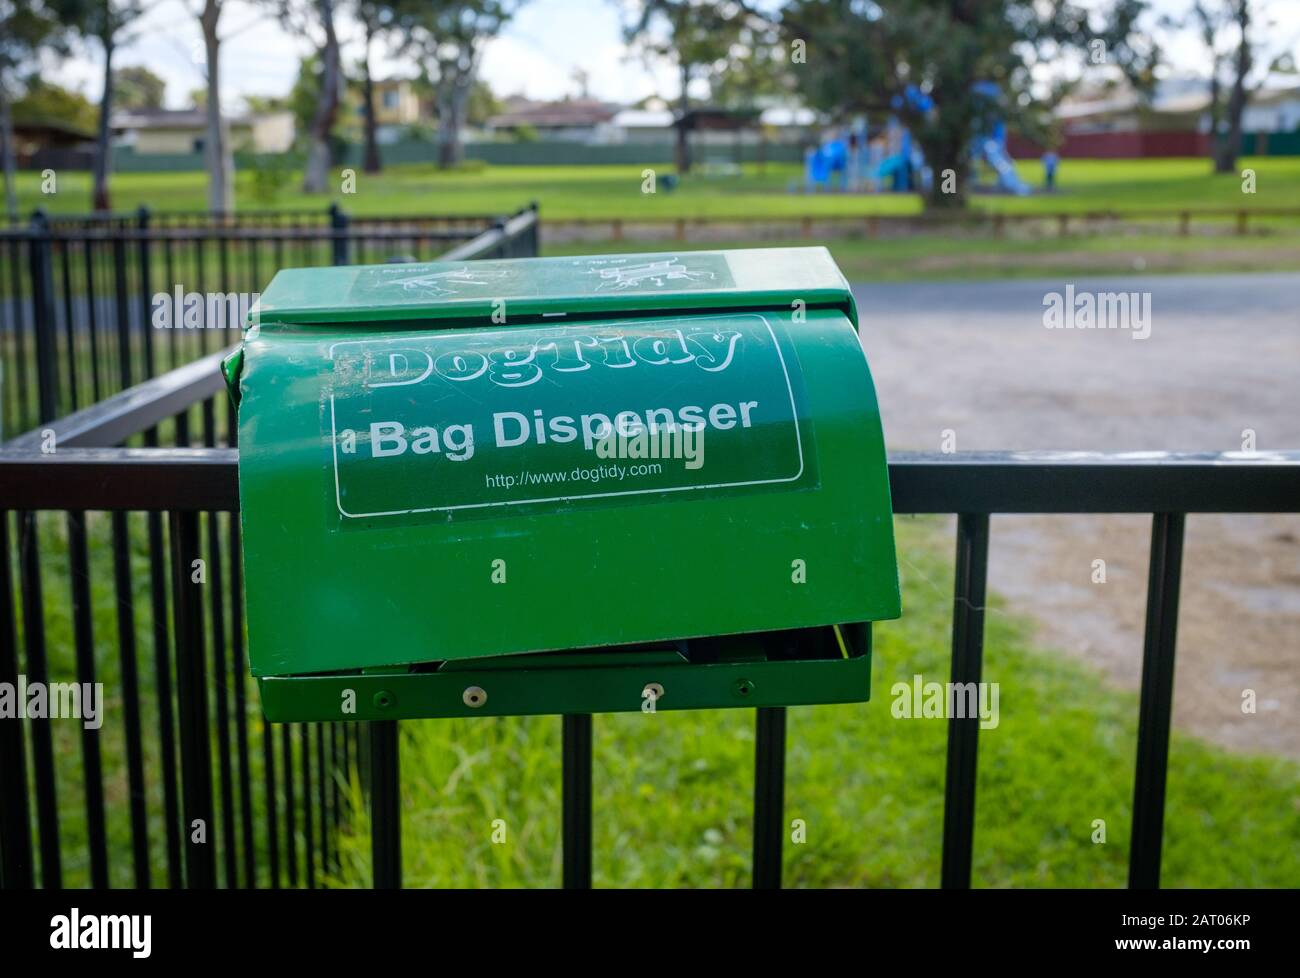 Dogtidy Bag Dispenser, empty and battered, on dog park railing in NSW, Australia Stock Photo